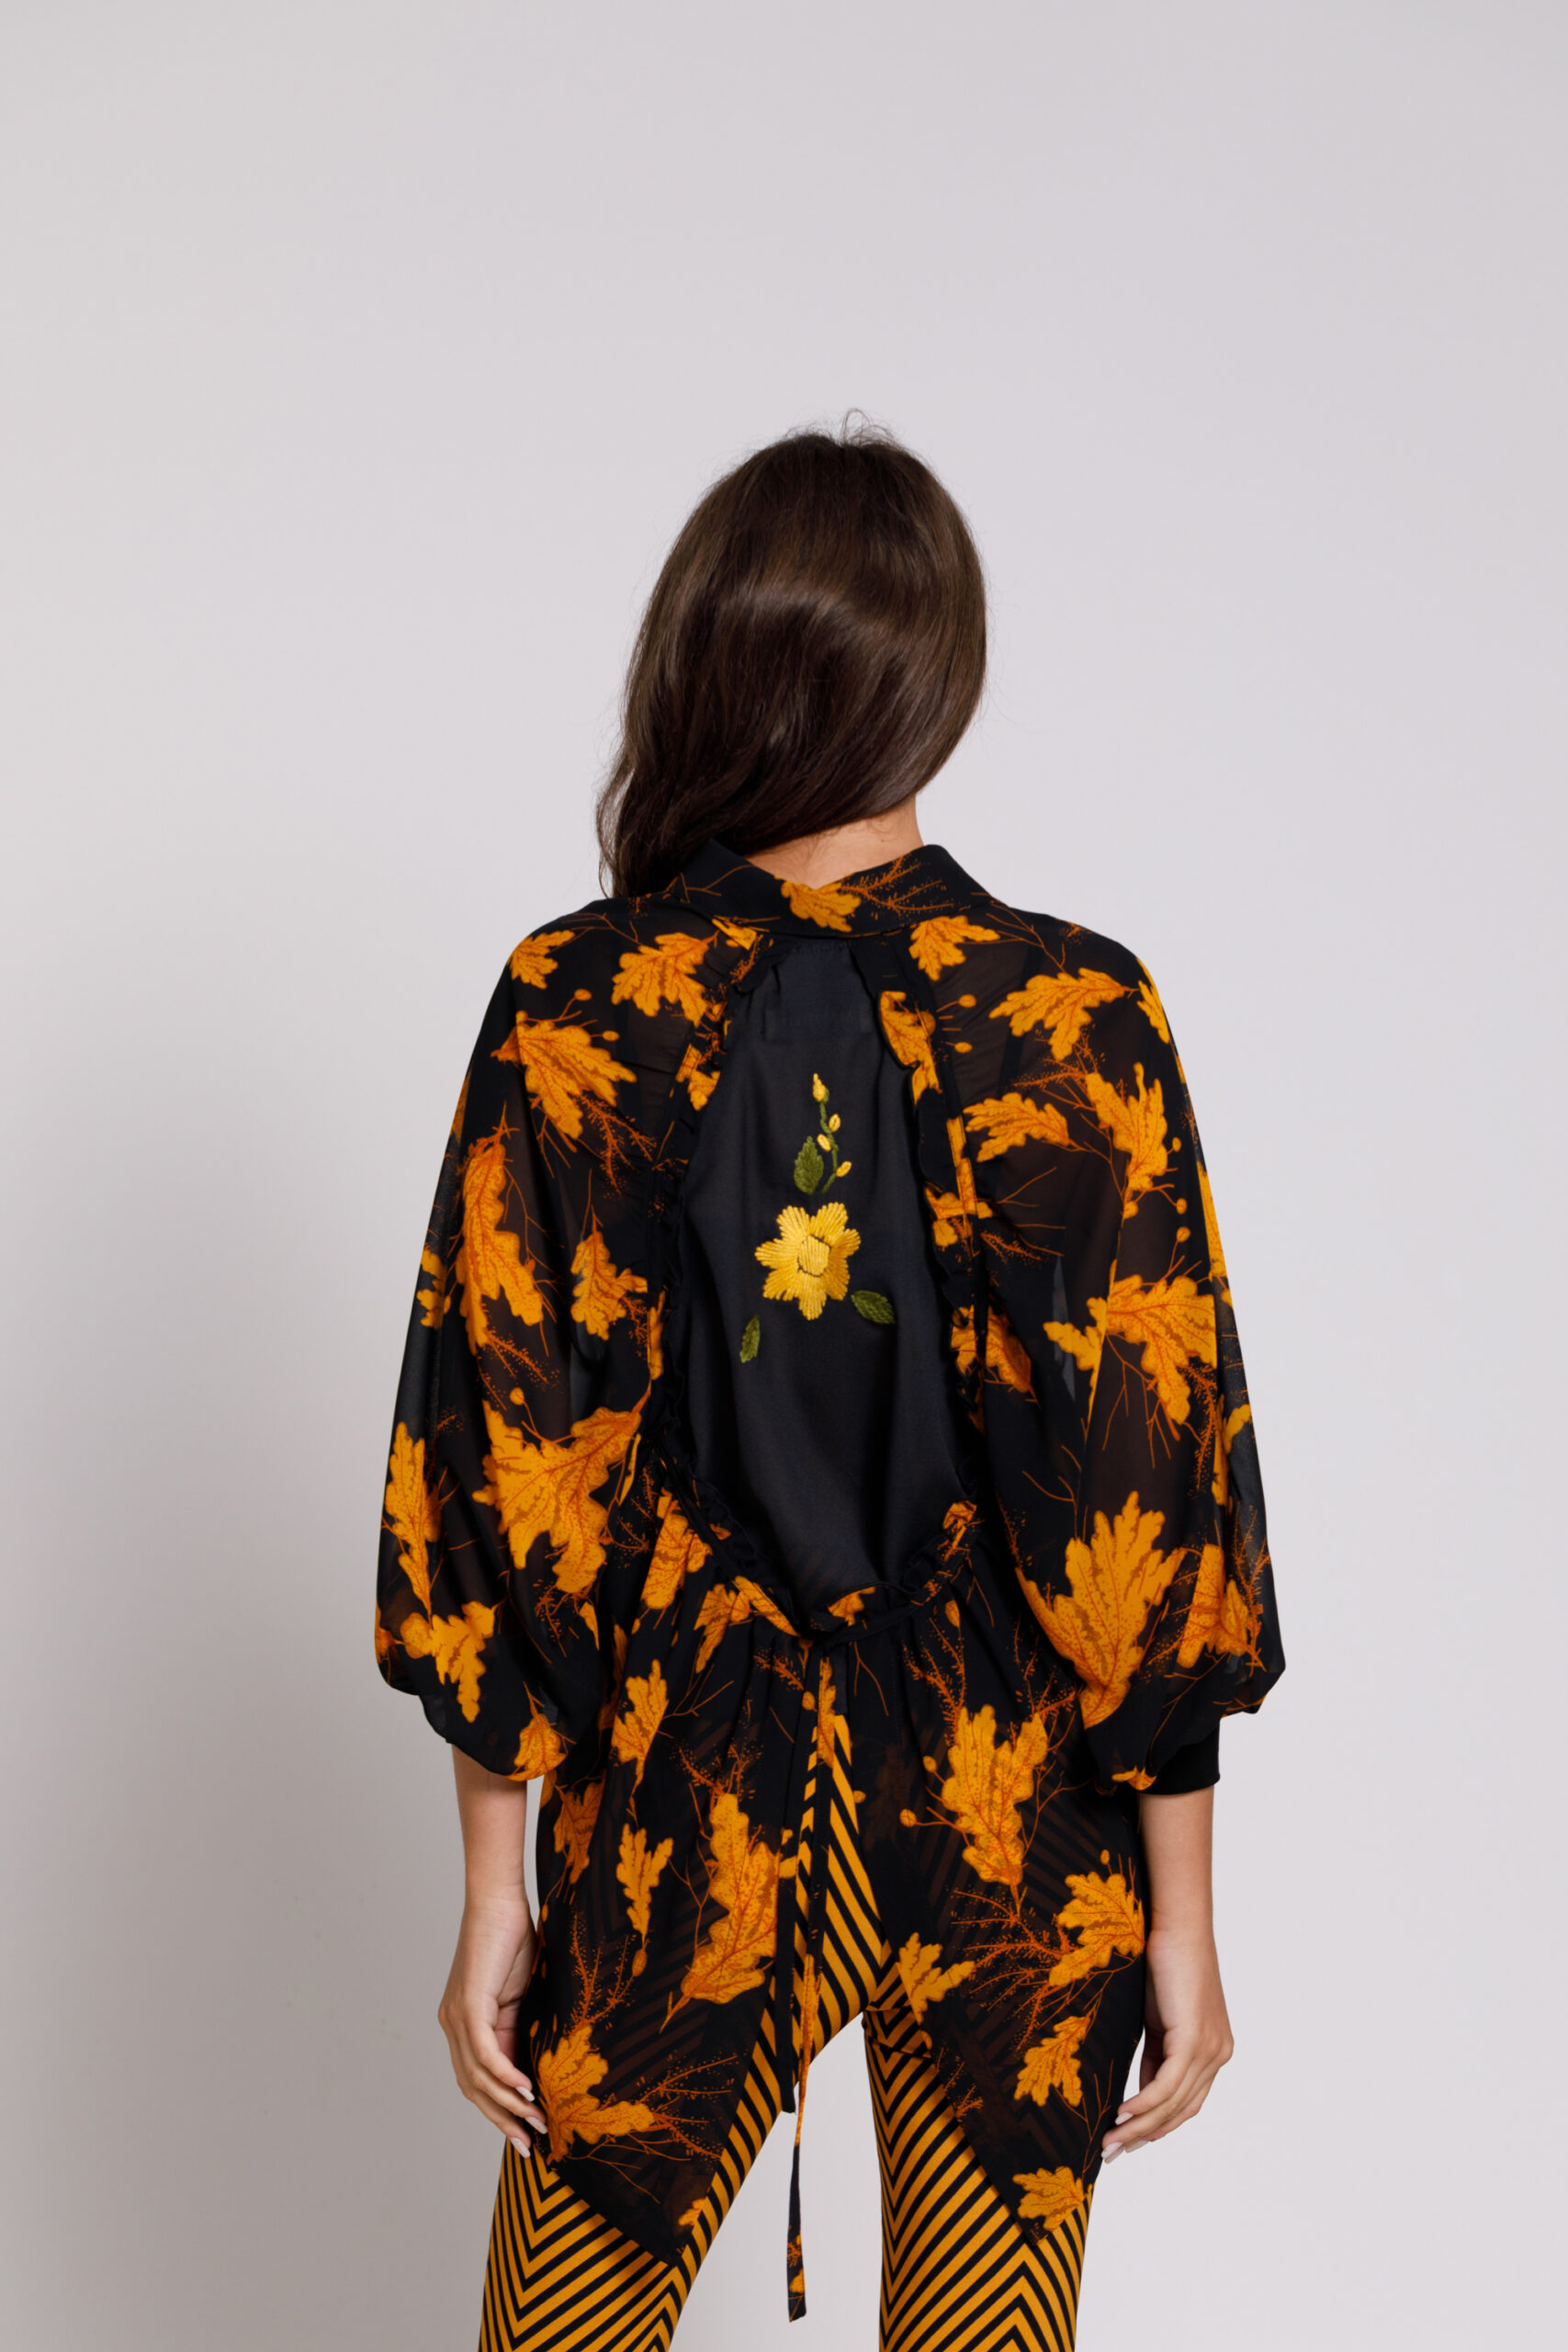 MARINA casual black veil shirt with yellow leaves. Natural fabrics, original design, handmade embroidery